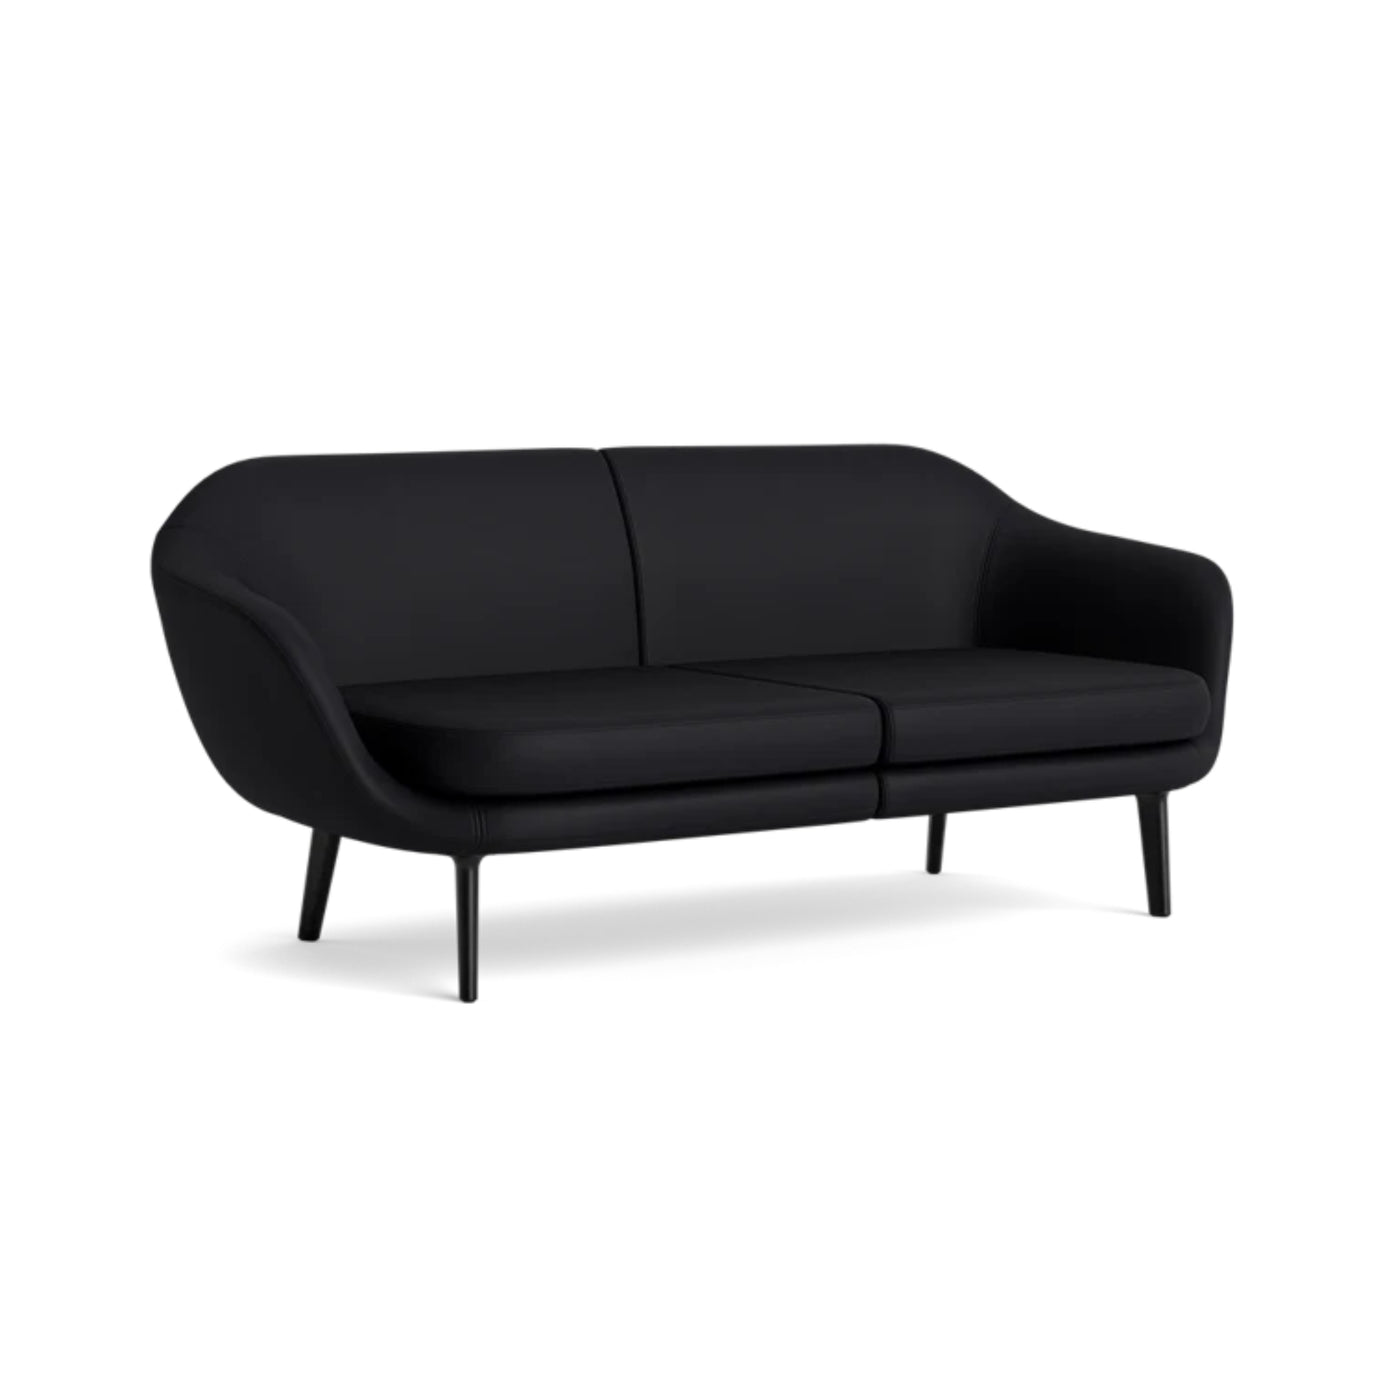 Normann Copenhagen Sum Modular 2 Seater Sofa. Made to order from someday designs. #colour_ultra-black-41599